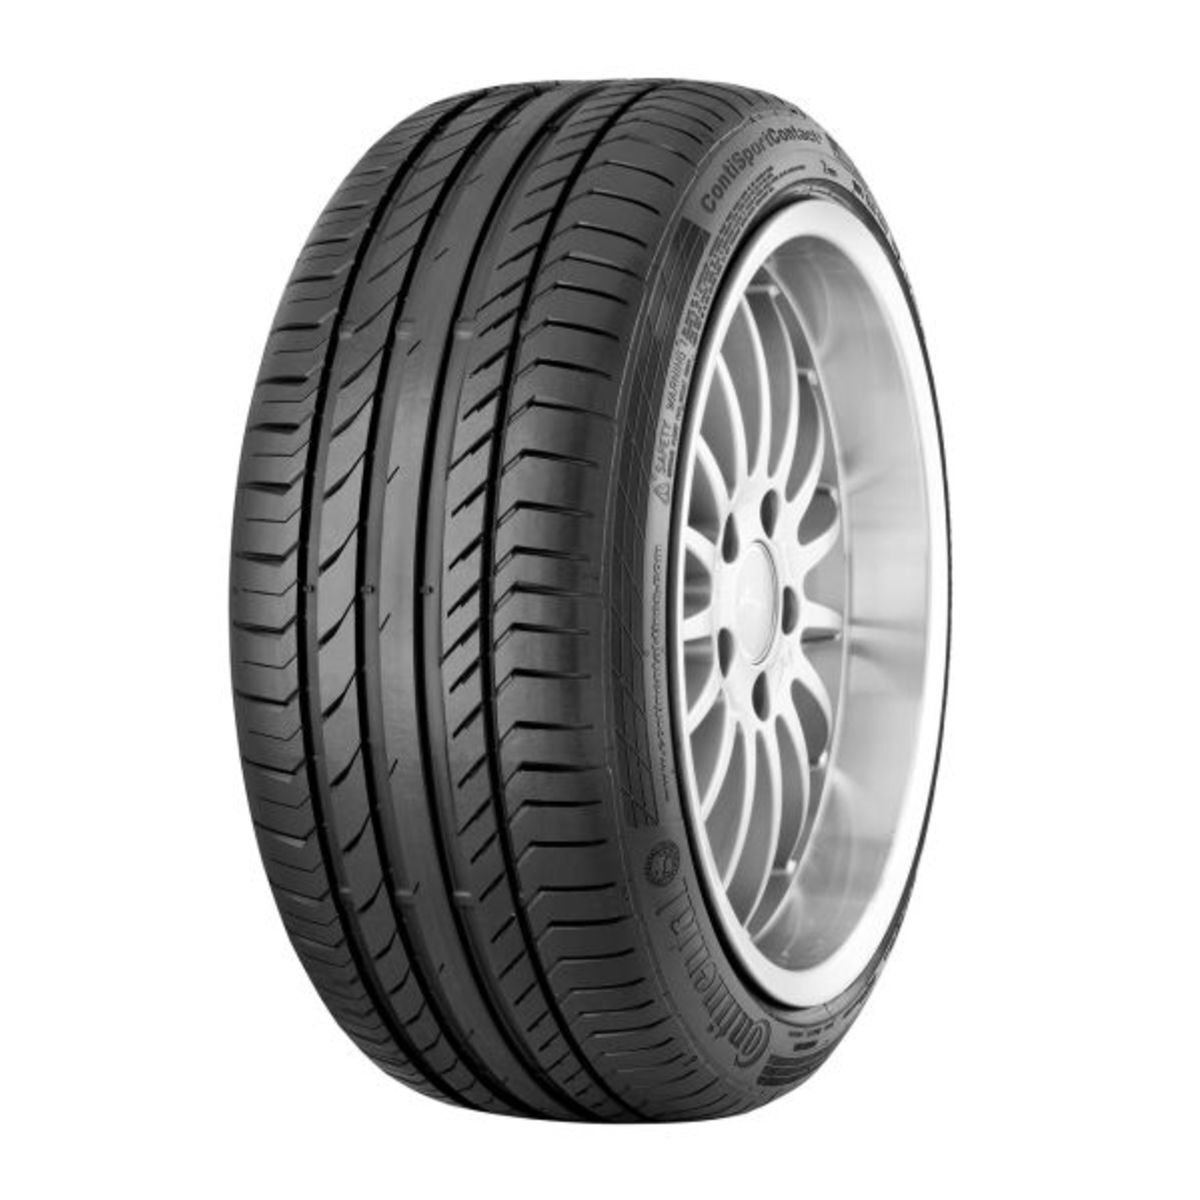 Neumáticos de verano CONTINENTAL ContiSportContact 5 215/45R17 XL 91W